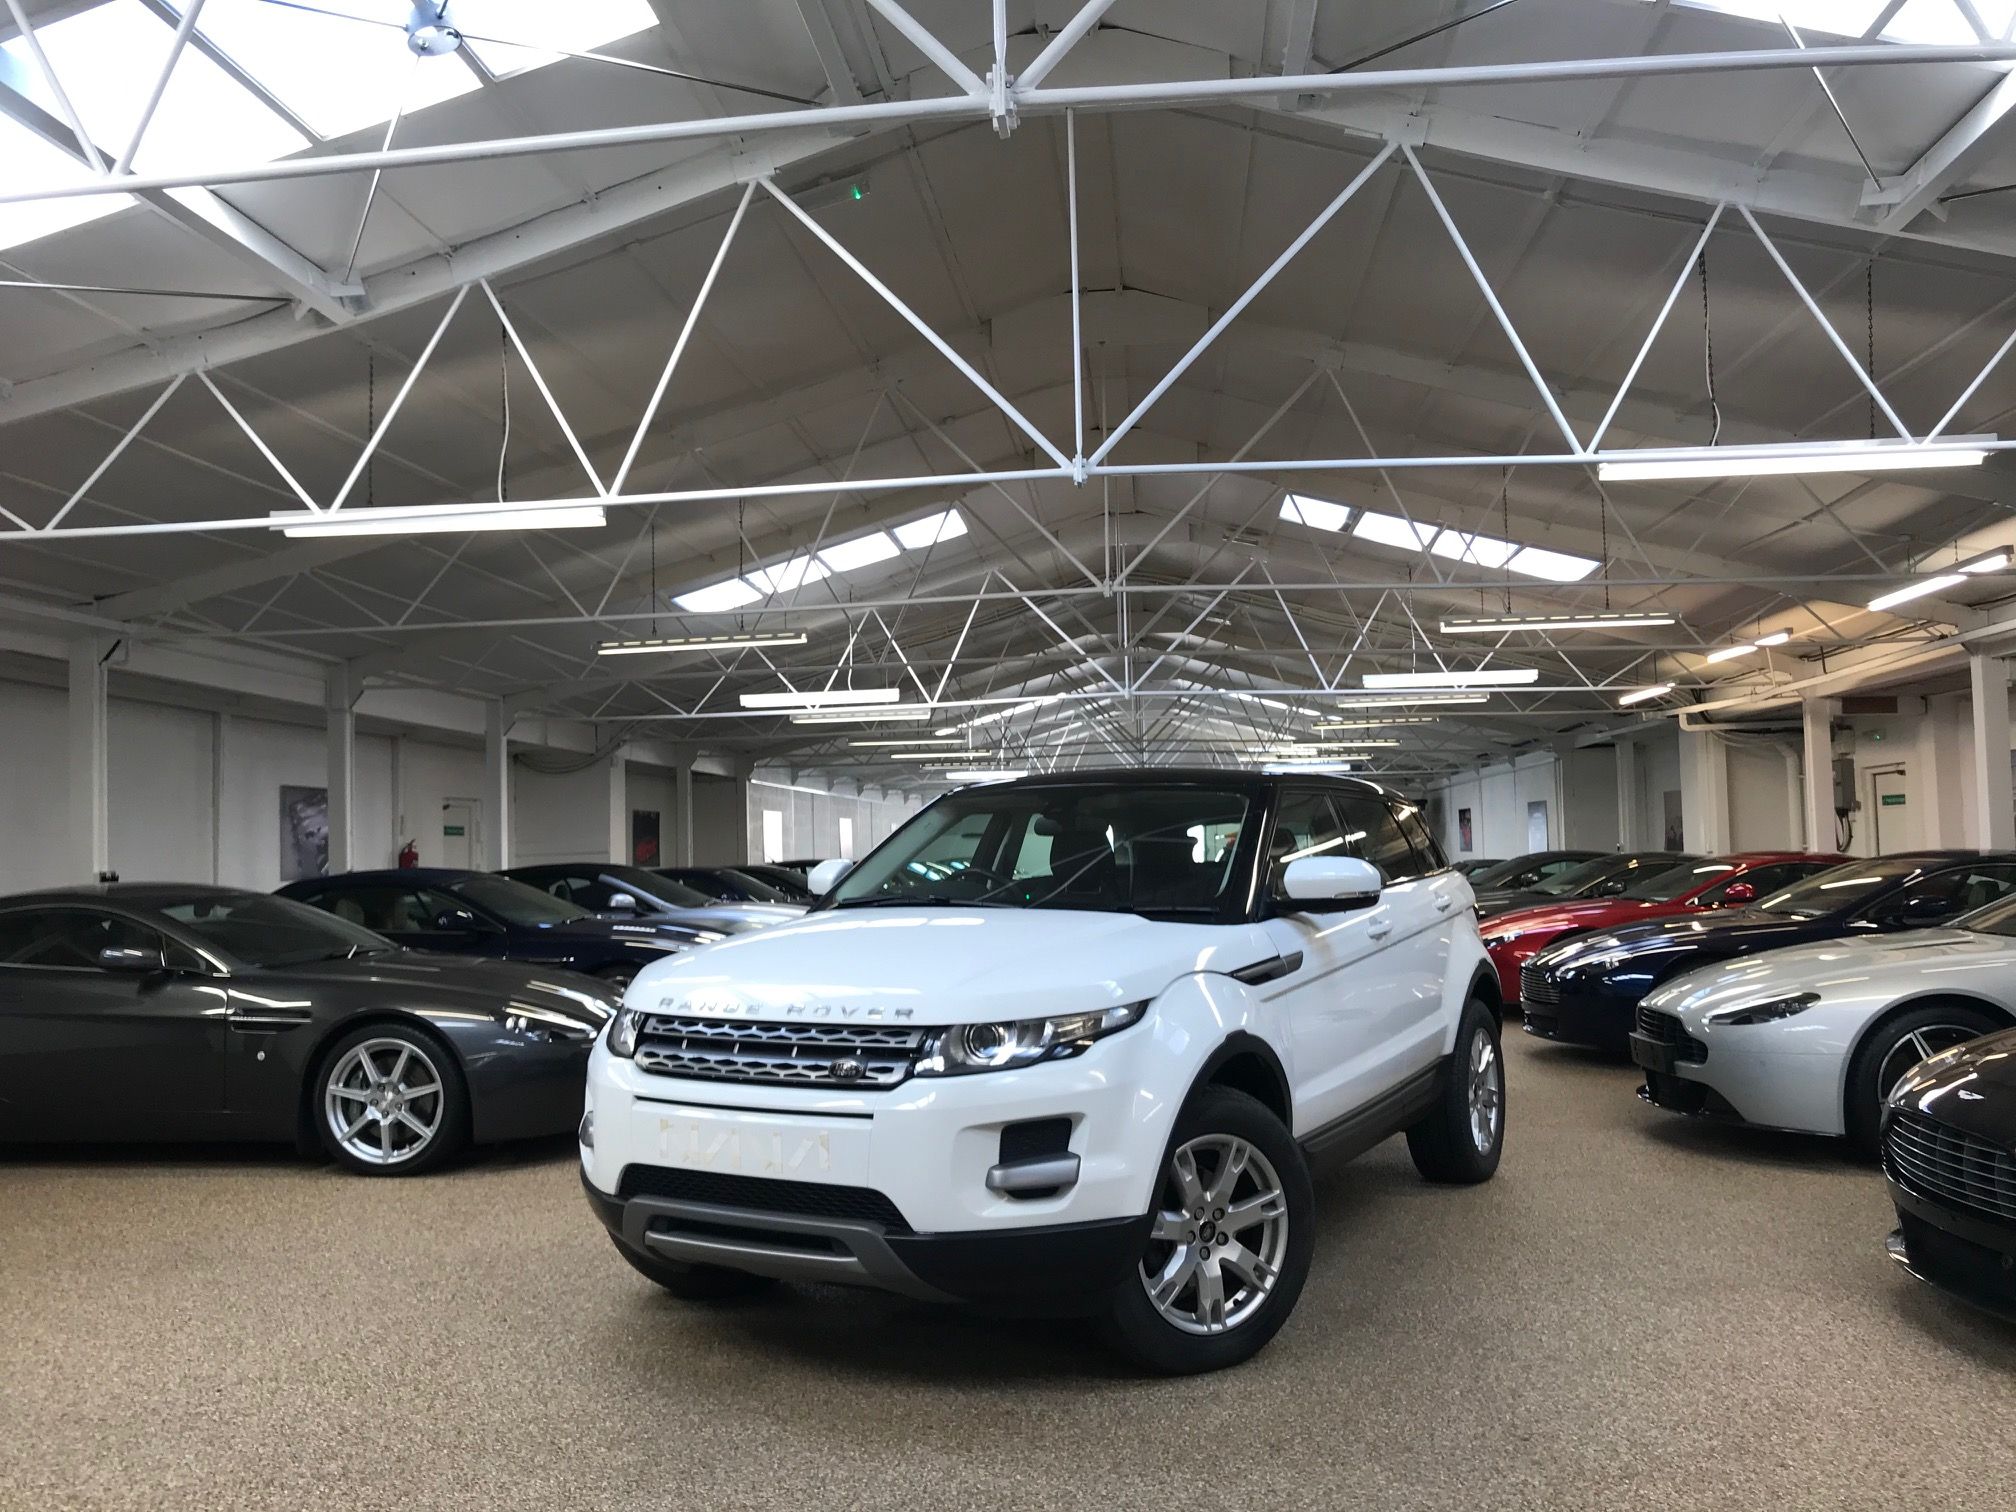 Range Rover Evoque for sale